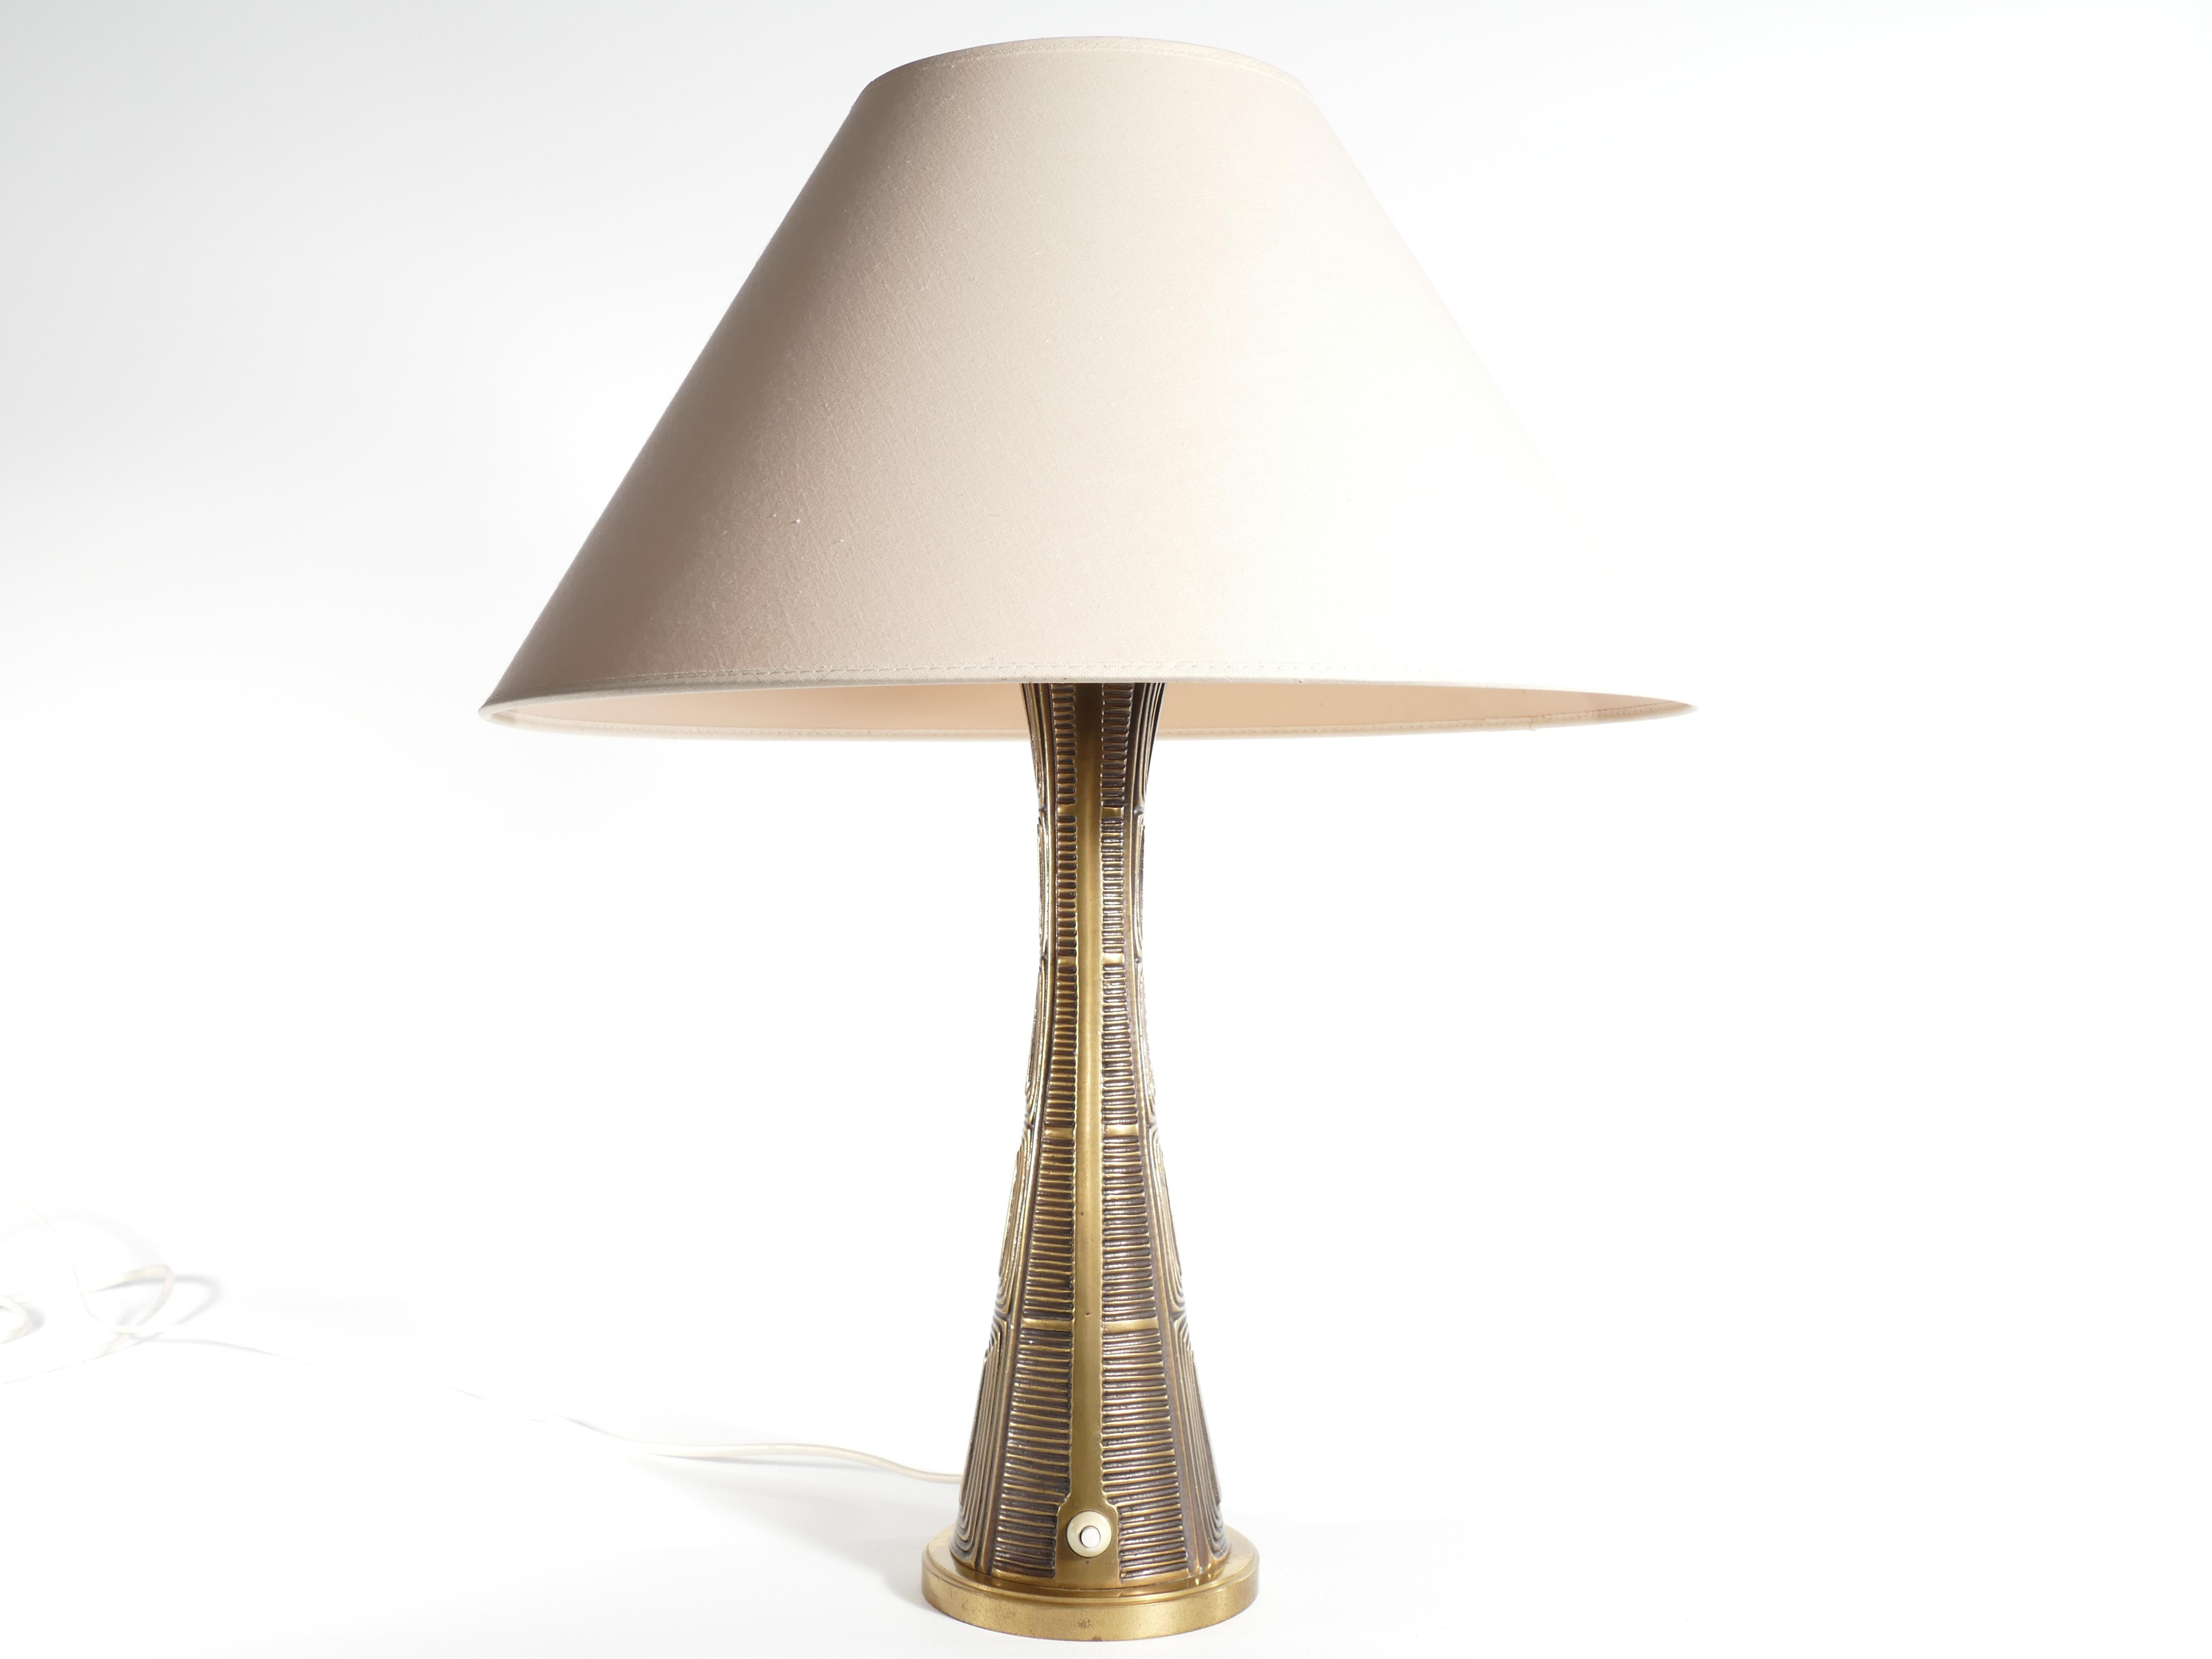 Mid-20th Century Scandinavian Modern Brass Table Lamp by Sonja Katzin for ASEA, Sweden, 1950’s